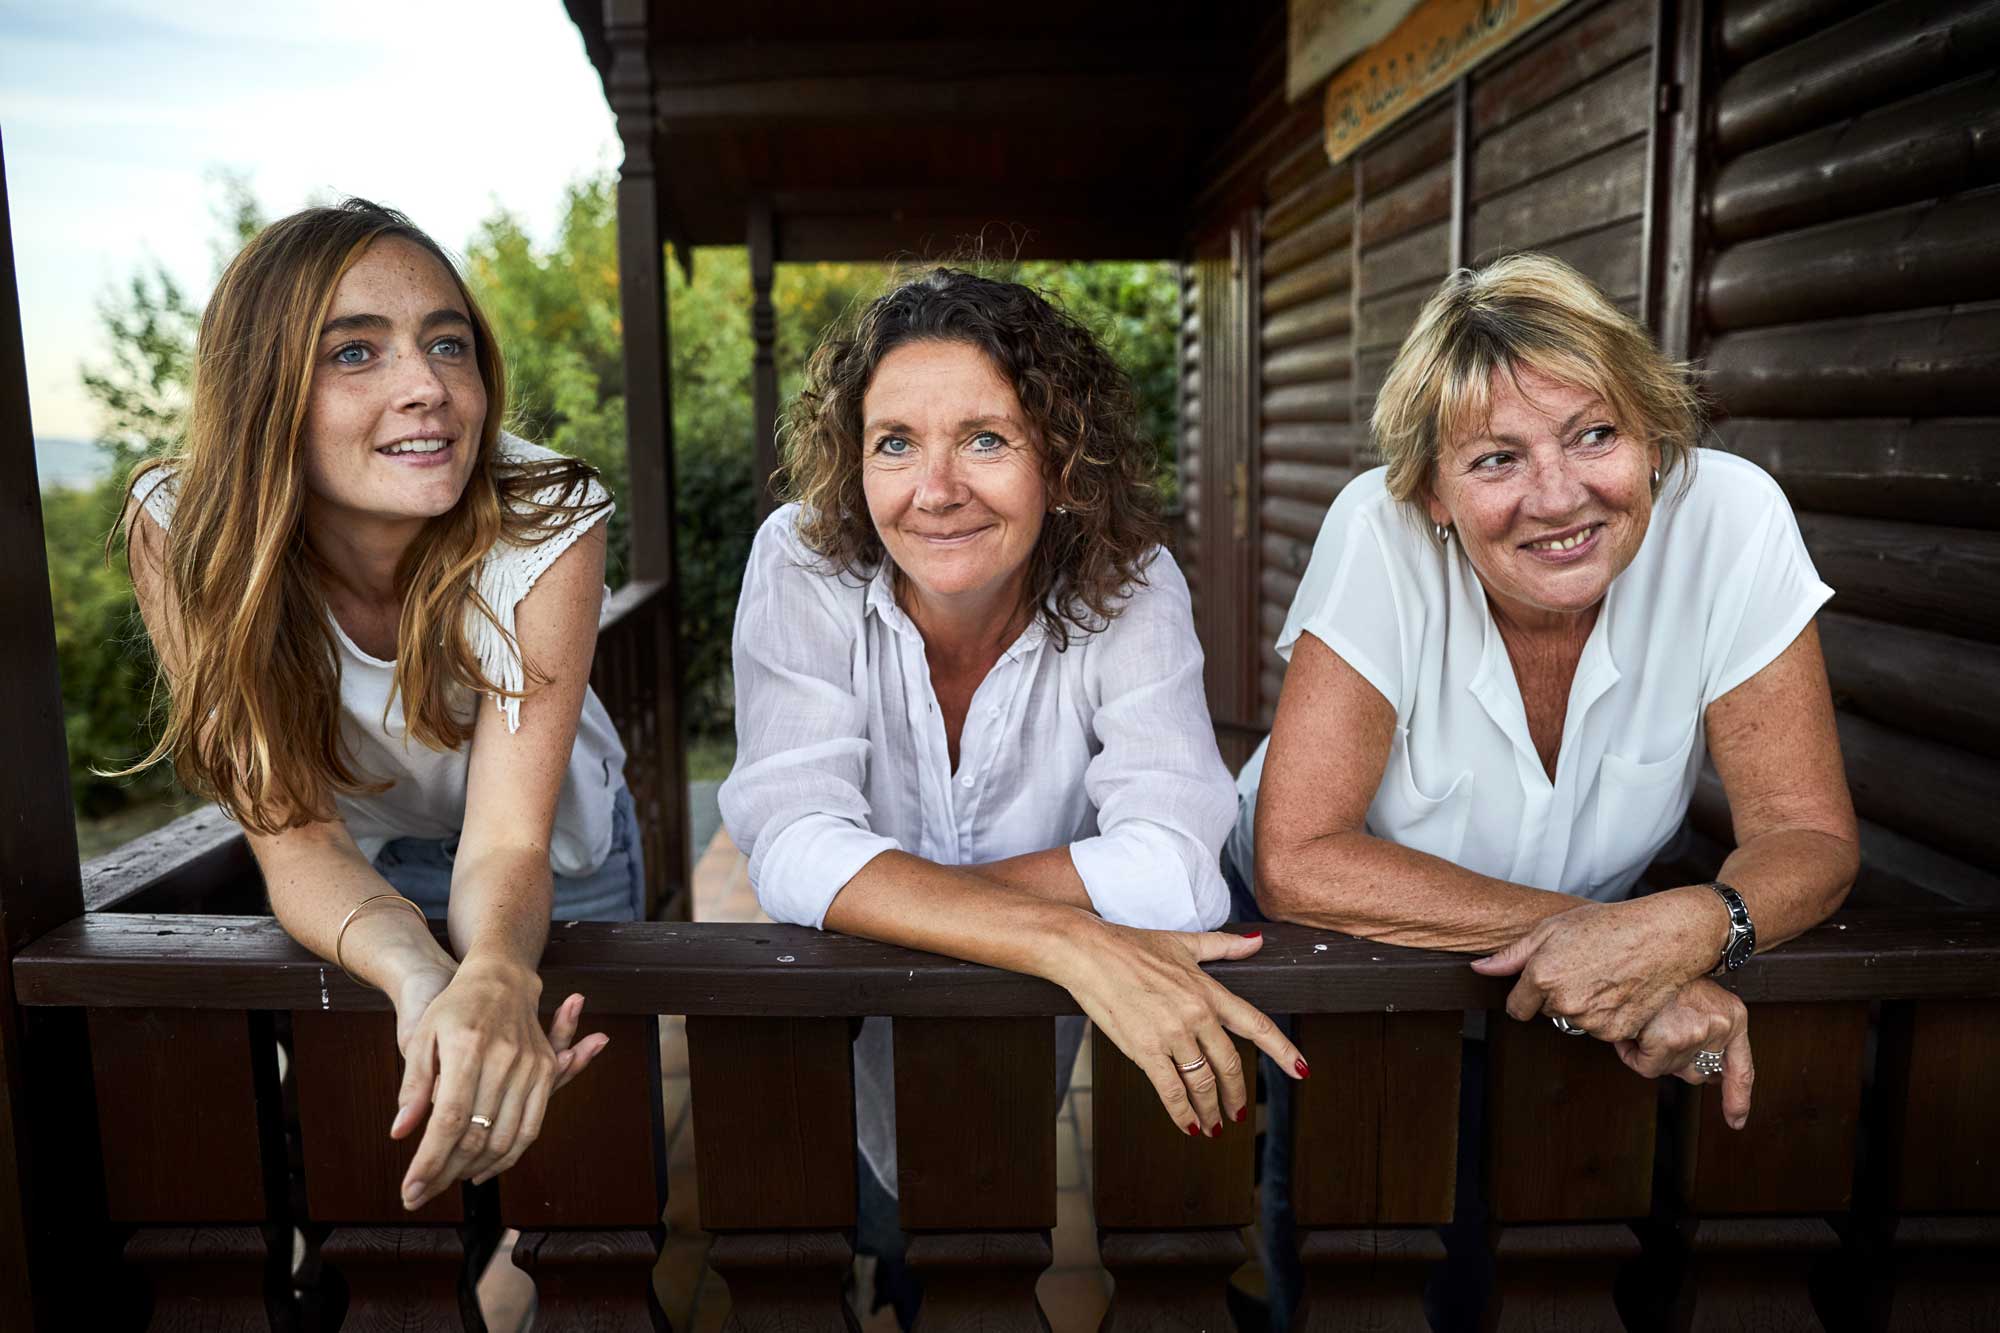 Three women standing on a balcony, wearing white shirts